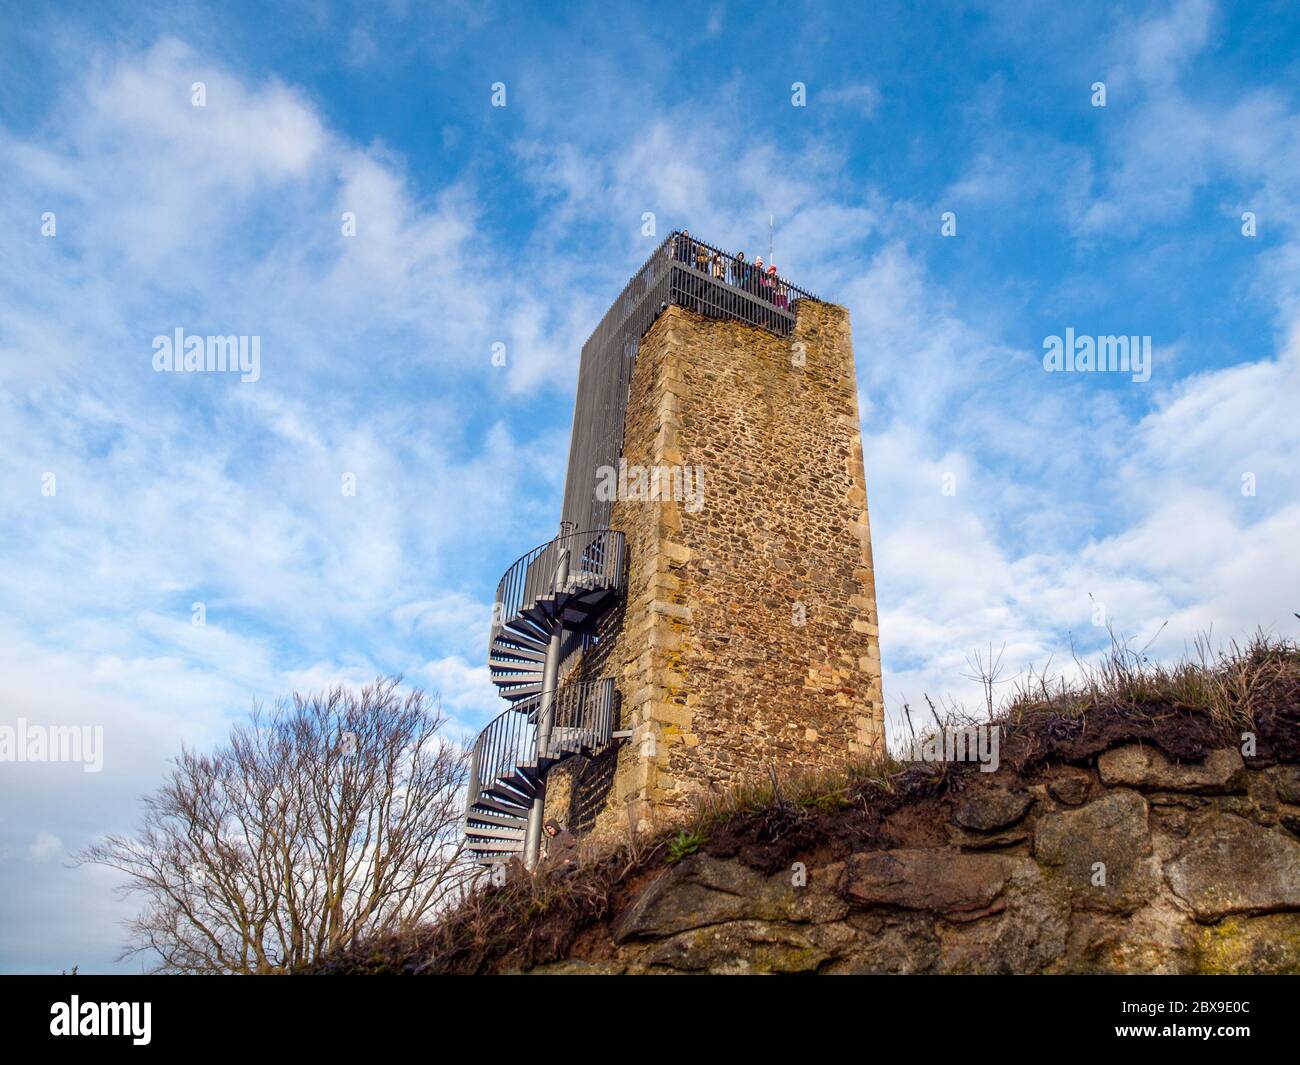 Orlik nad Humpolcem castle tower after reconstruction with many tourists on the top, Vysocina, Czech Republic. Stock Photo